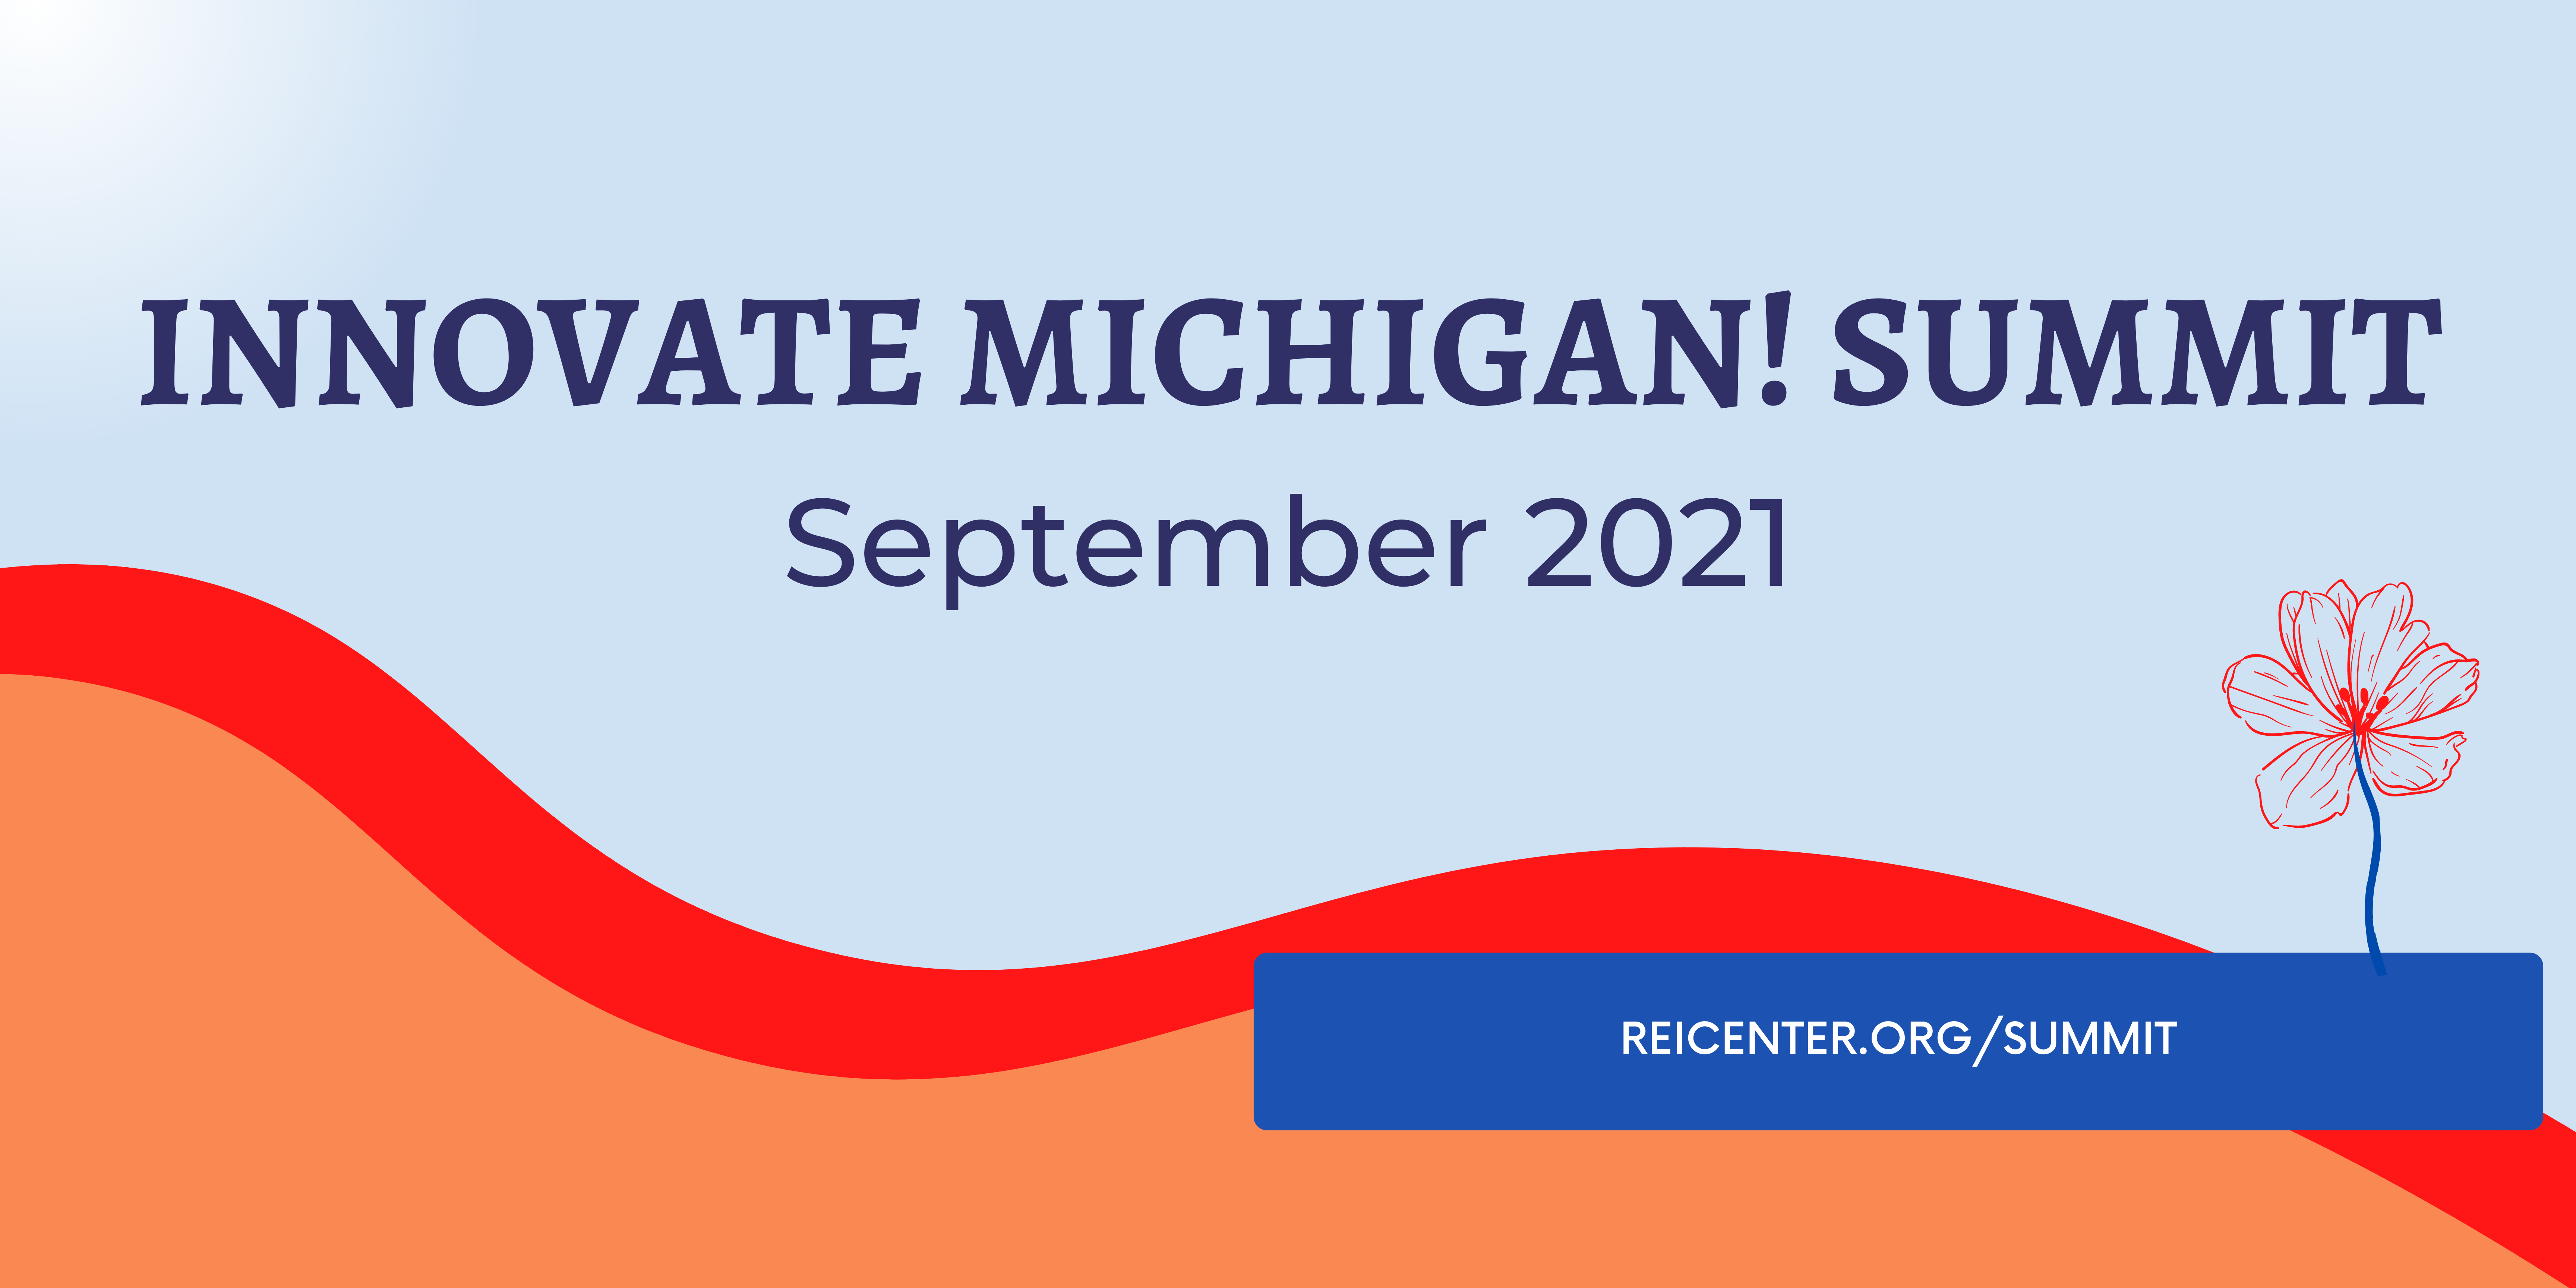 Innovate Michigan! Summit. September 2021. REIcenter.org/summit 